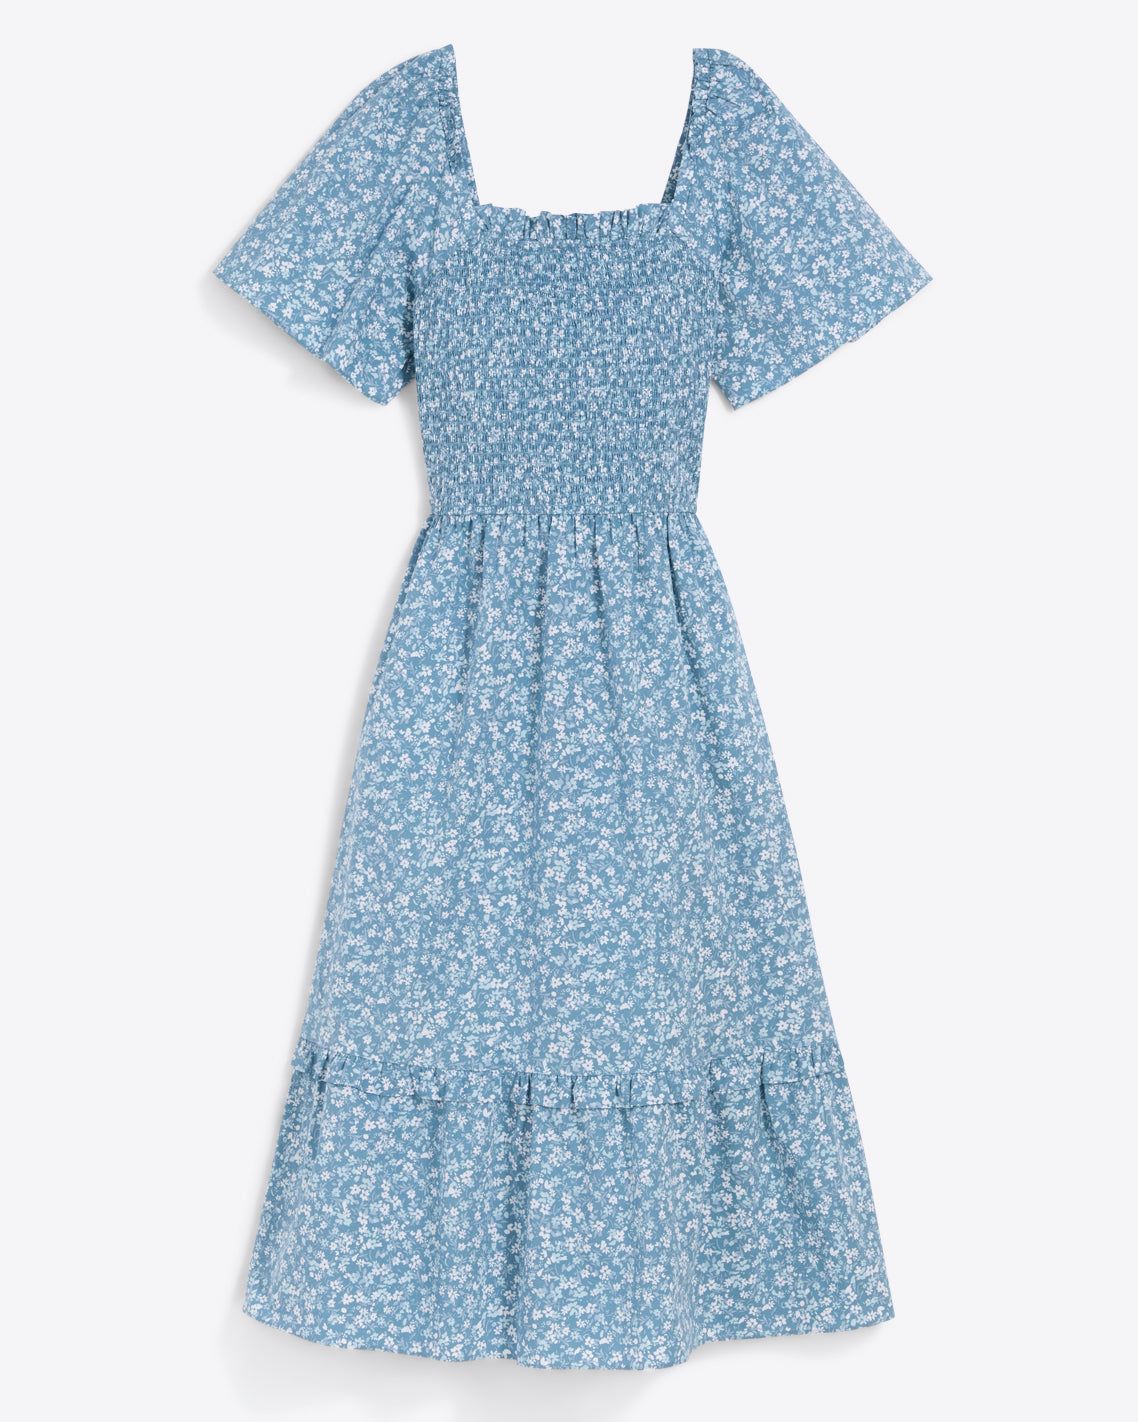 Deana Smocked Dress in Bluebell Floral | Draper James (US)